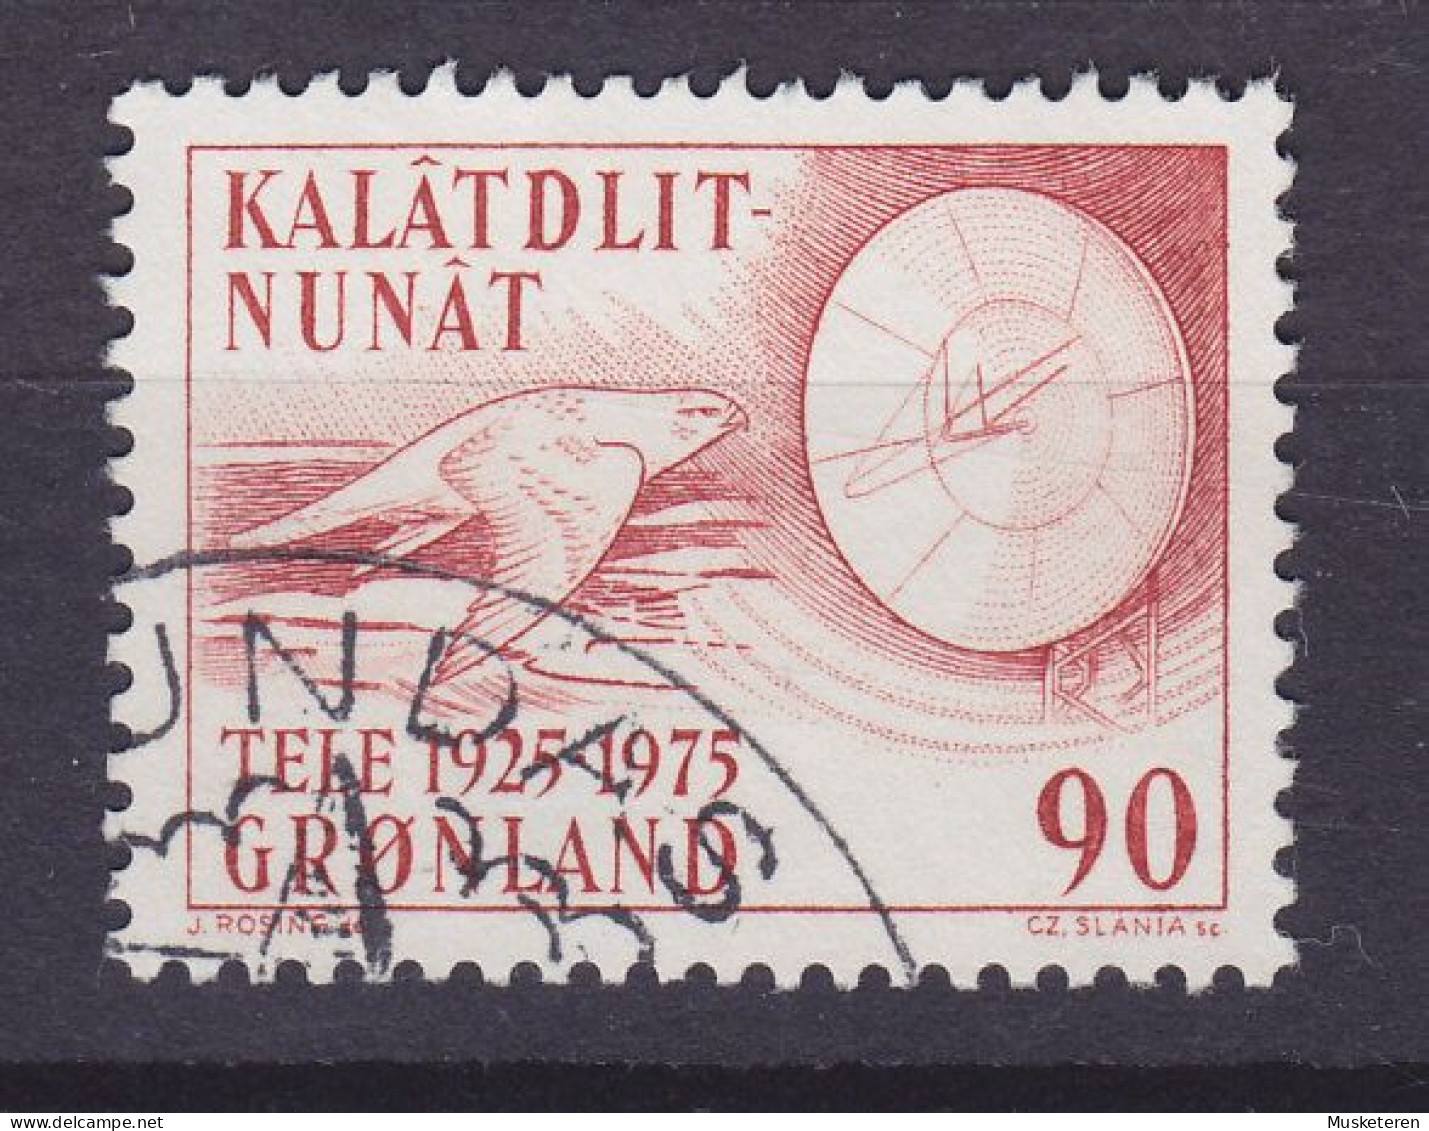 Greenland 1975 Mi. 94, 90 (Ø) Telekommunikation Bird Vogel Oiseau Gerfalke Parabolantenne (Cz. Slania) - Usati